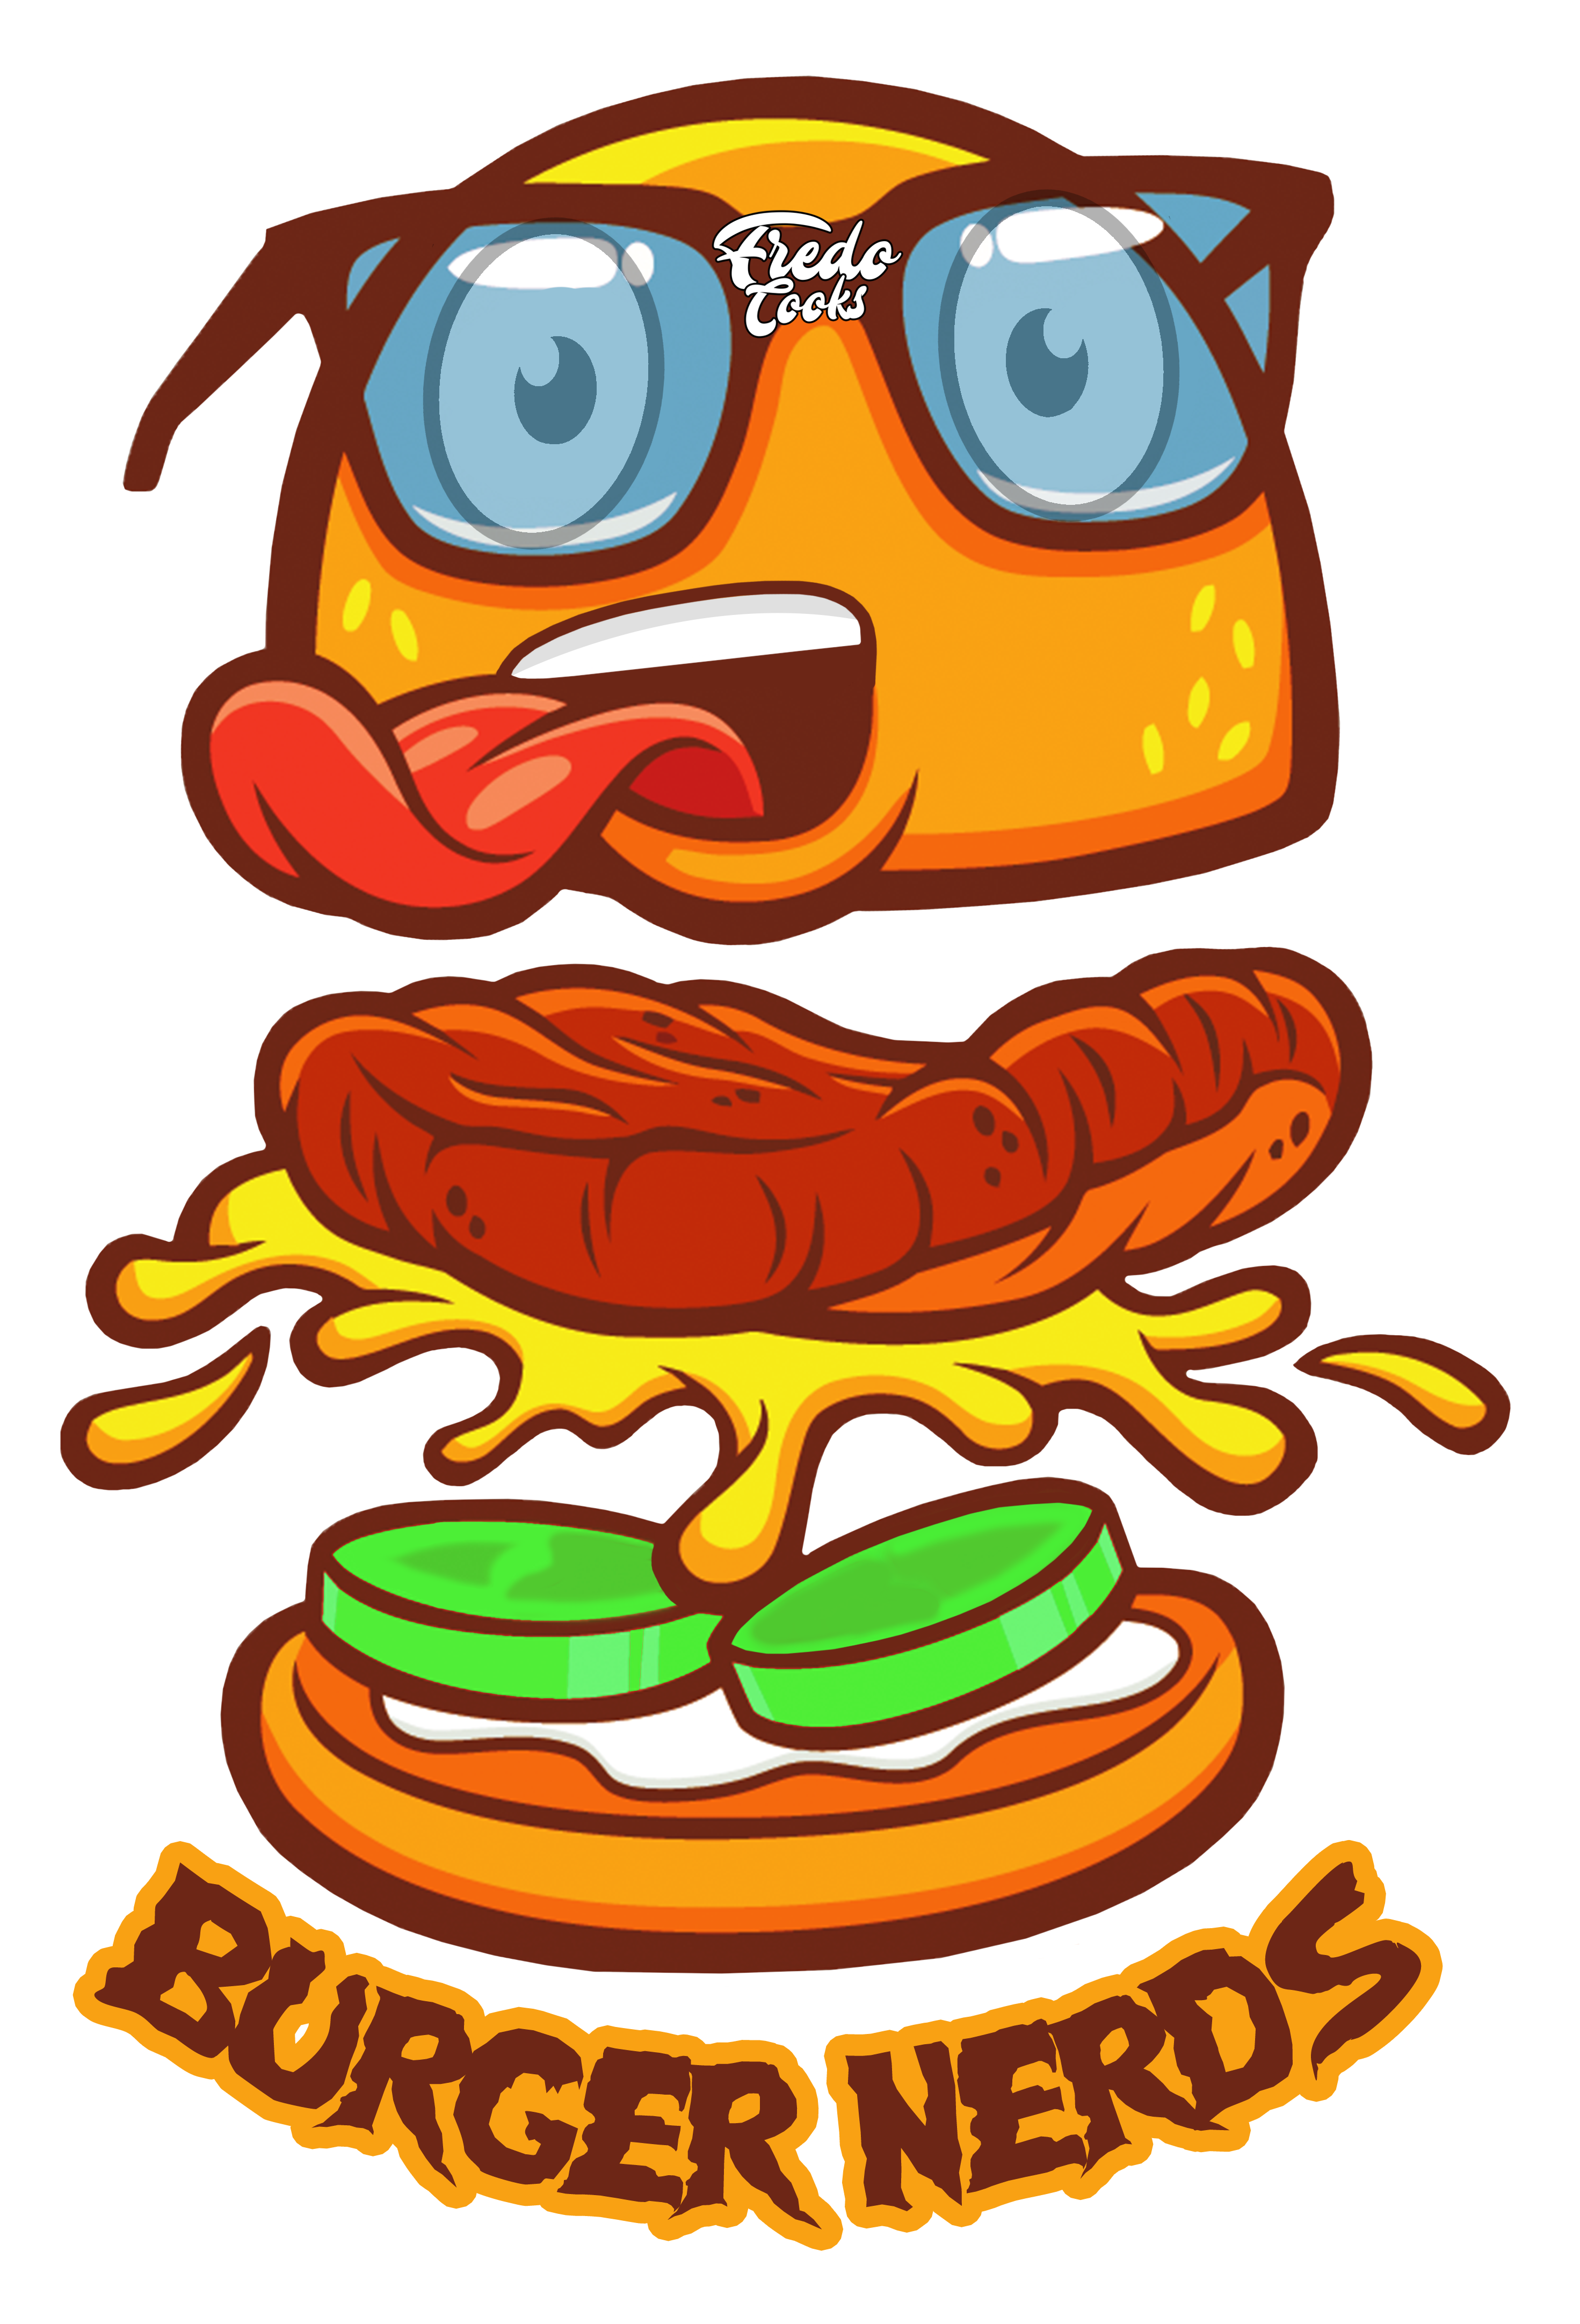 burger nerds logo